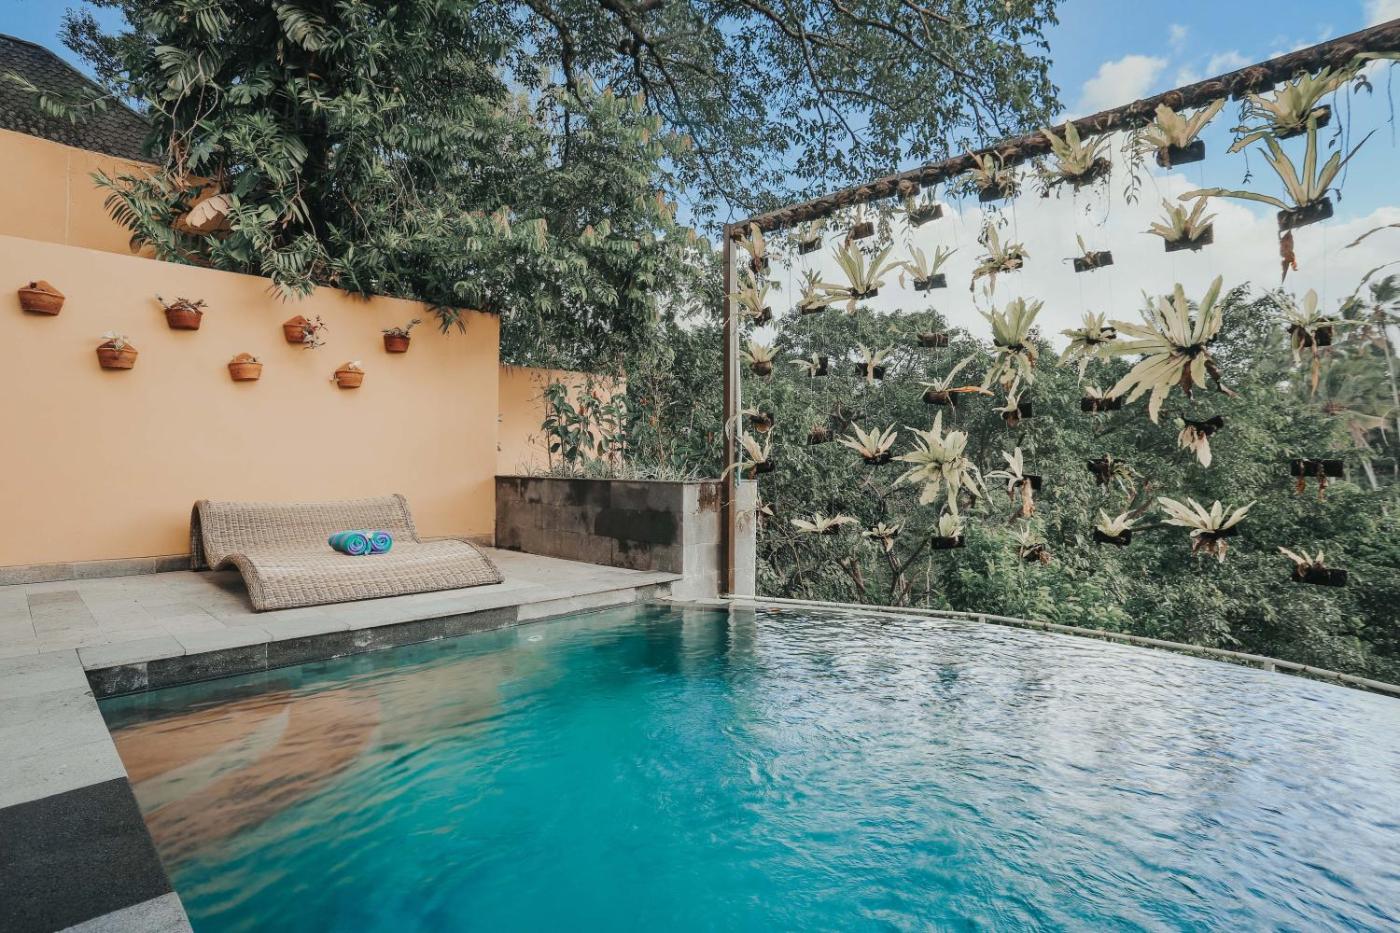 Hotel with private pool - The Sebali Resort